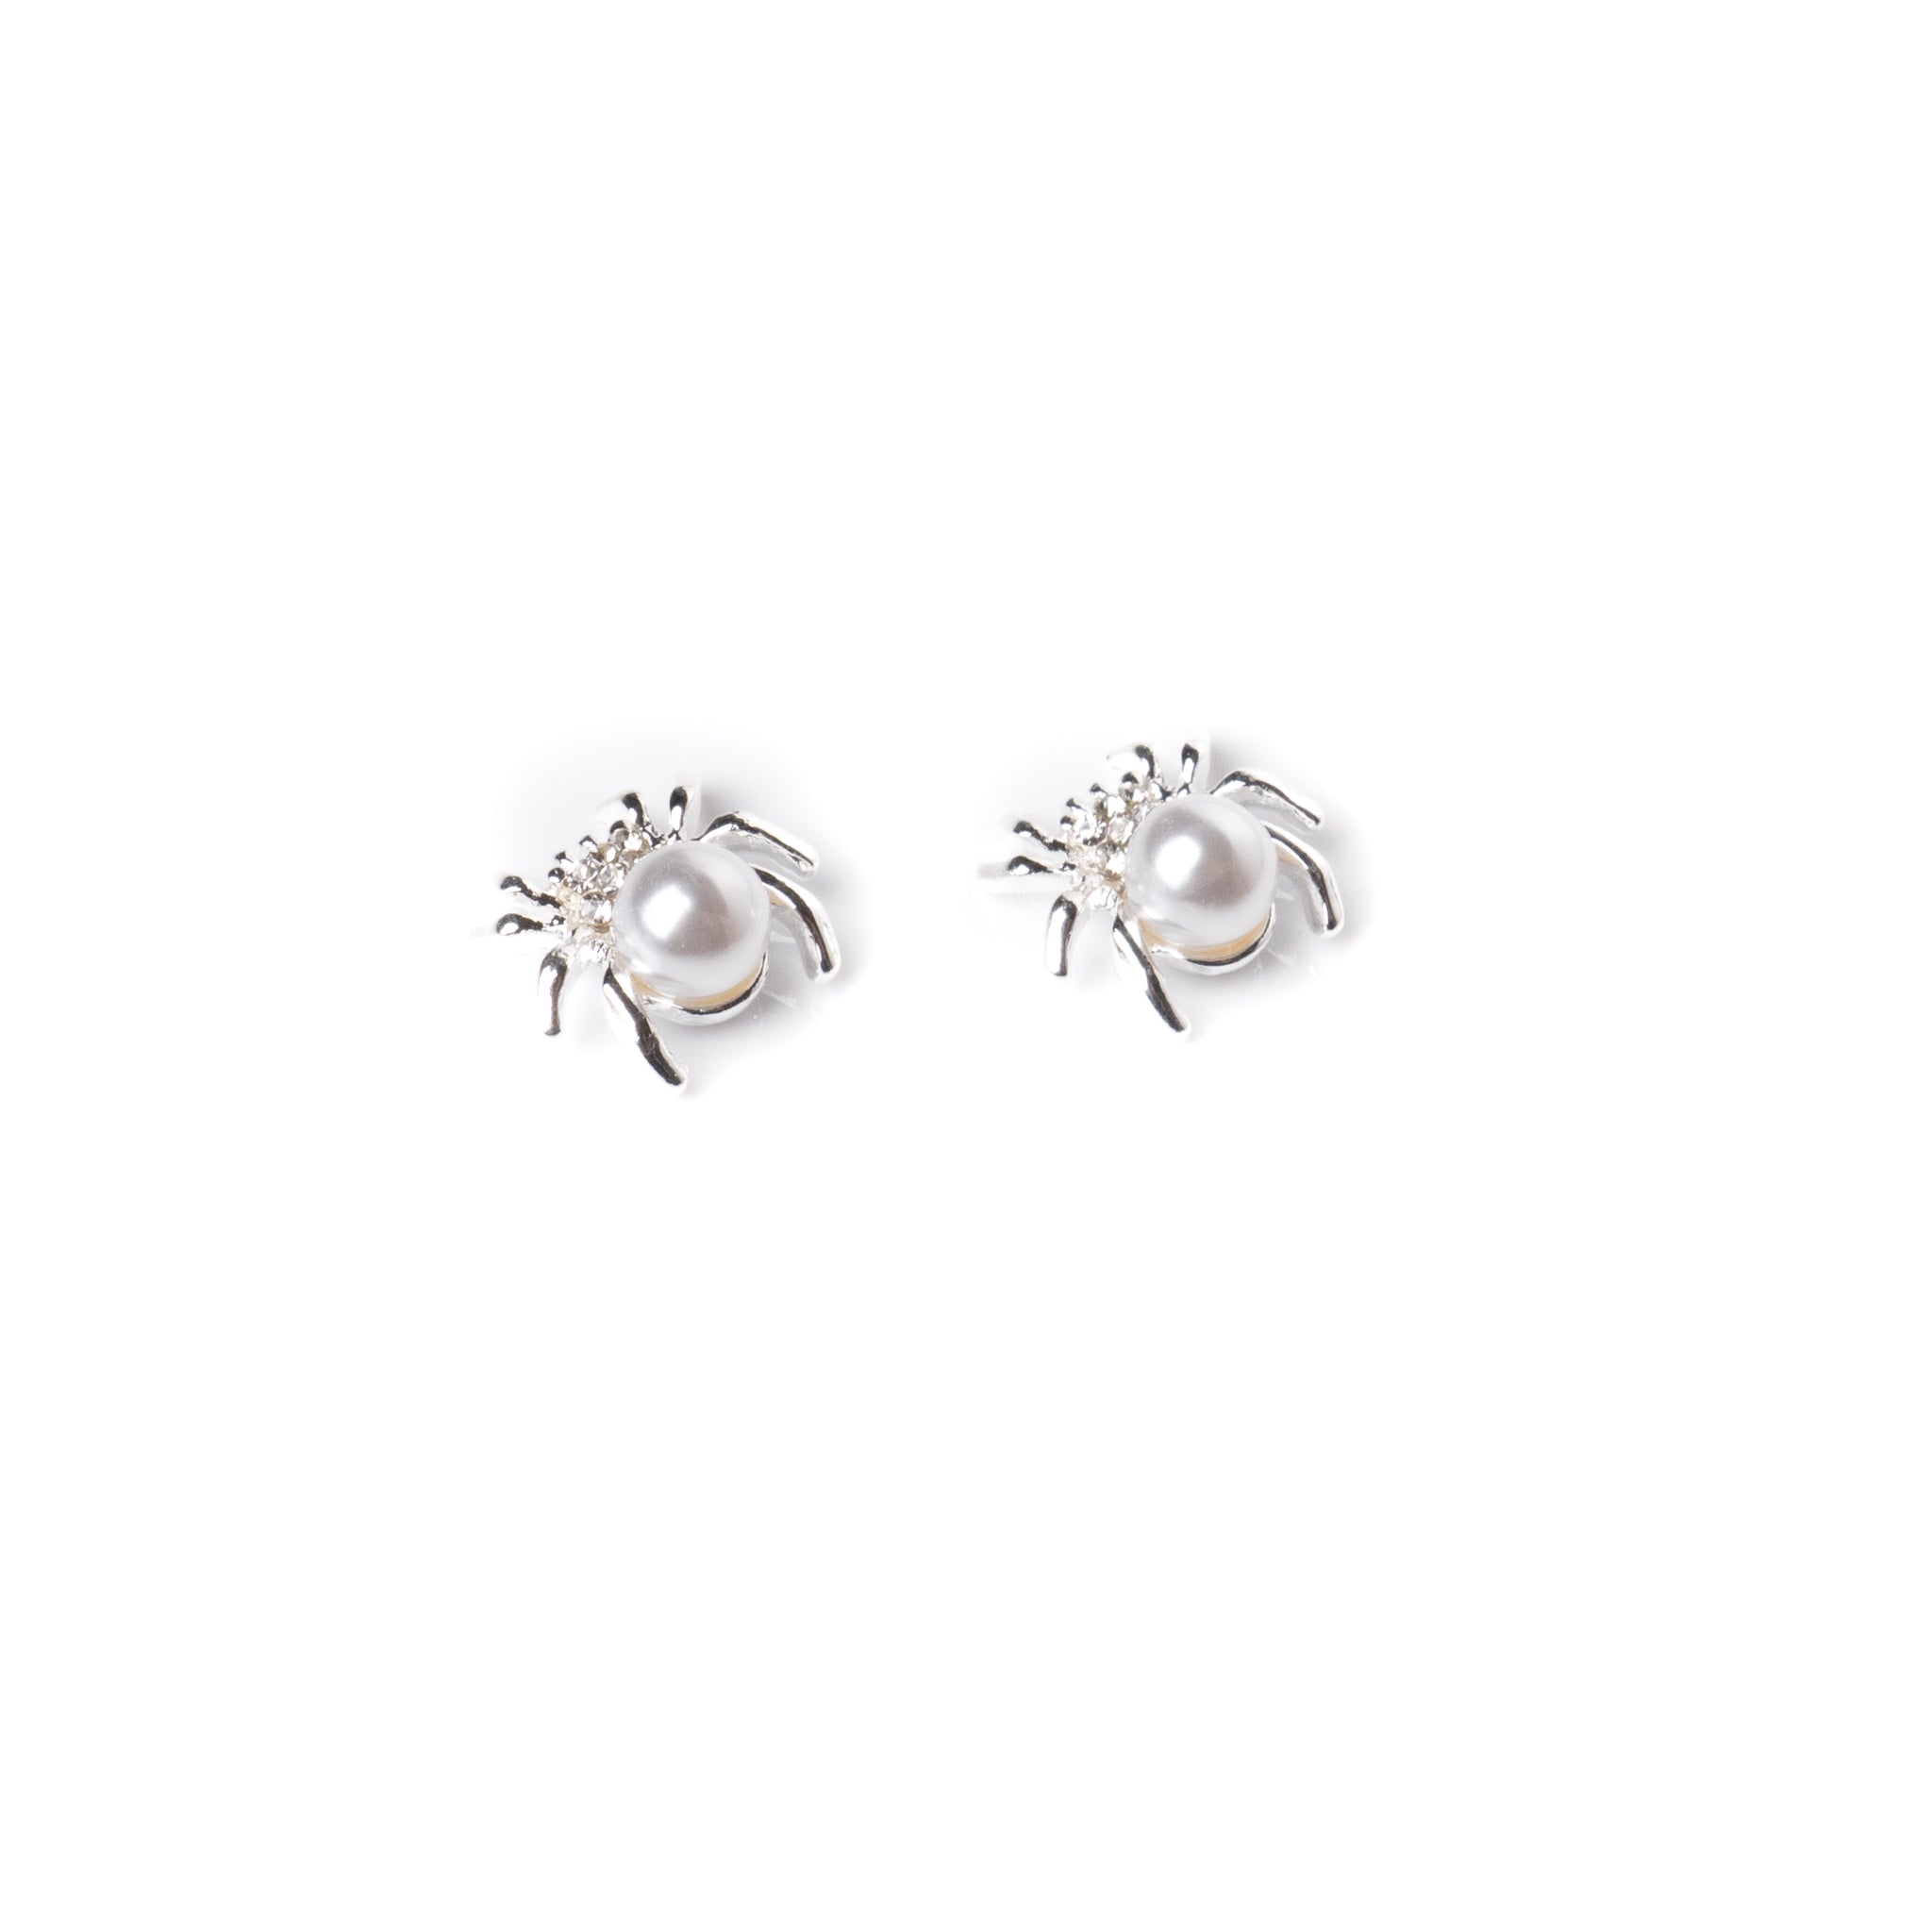 Silver W/ White Pearl Spider Charm